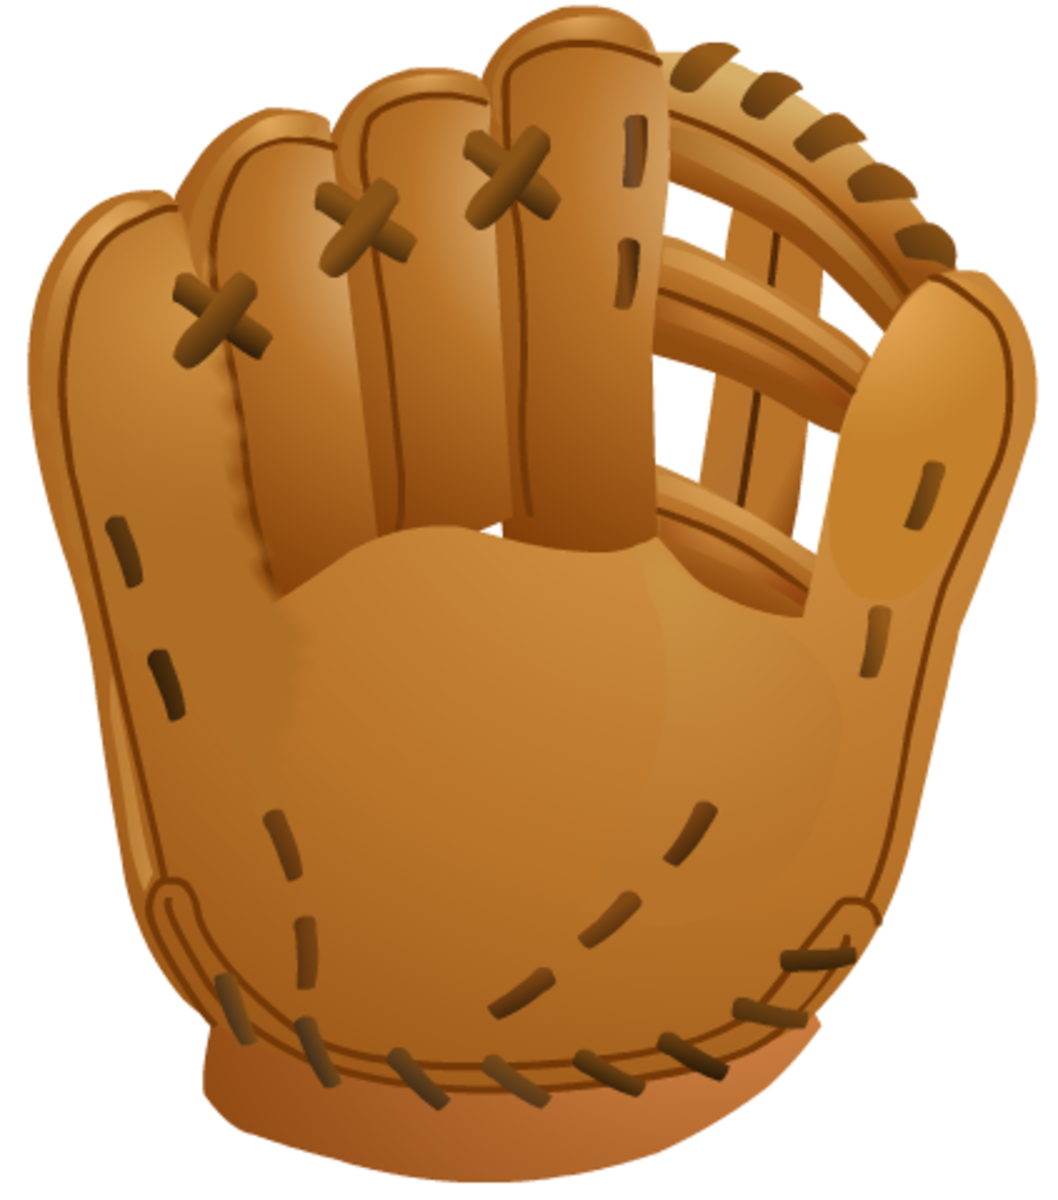 Free Softball and Baseball Clip Art | HubPages